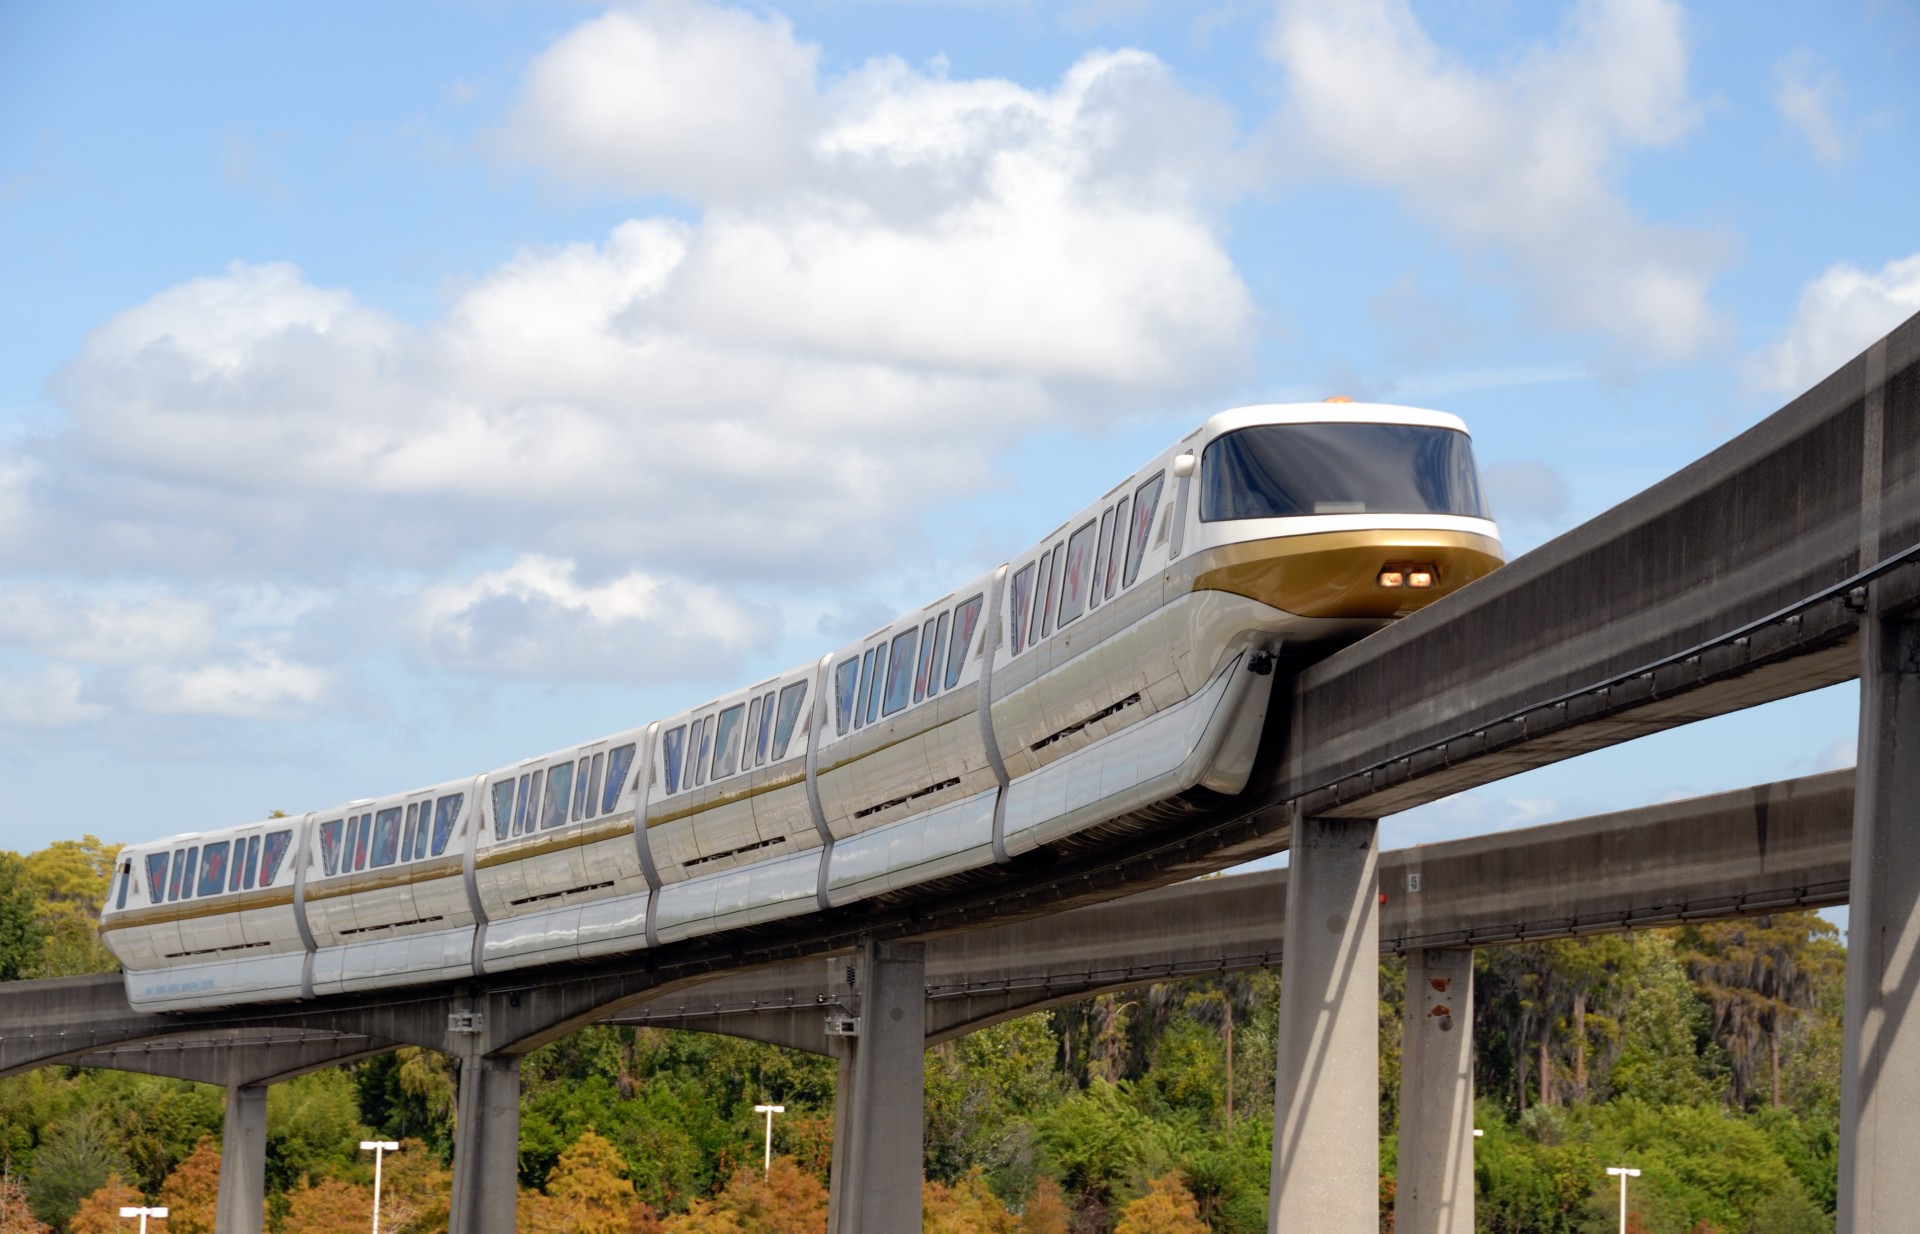 monorail train tracks free photo